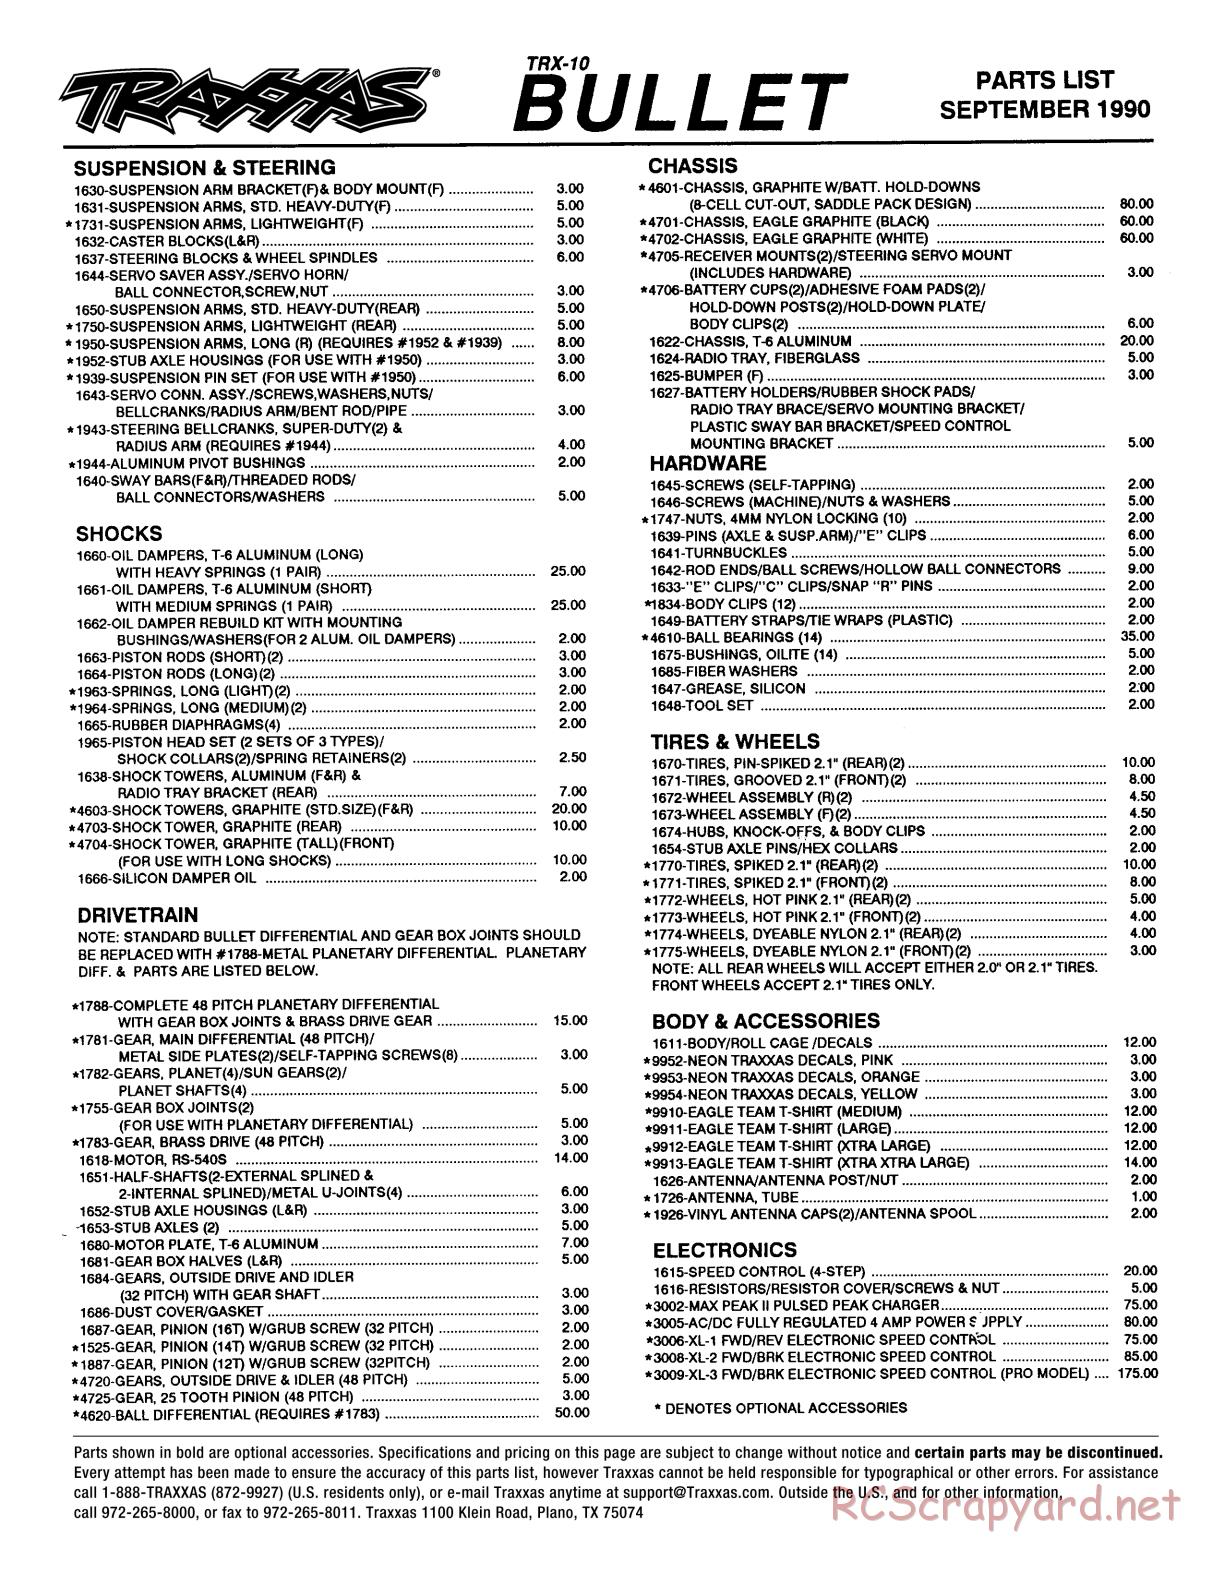 Traxxas - Bullet (TRX-10) (1988) - Parts List - Page 1